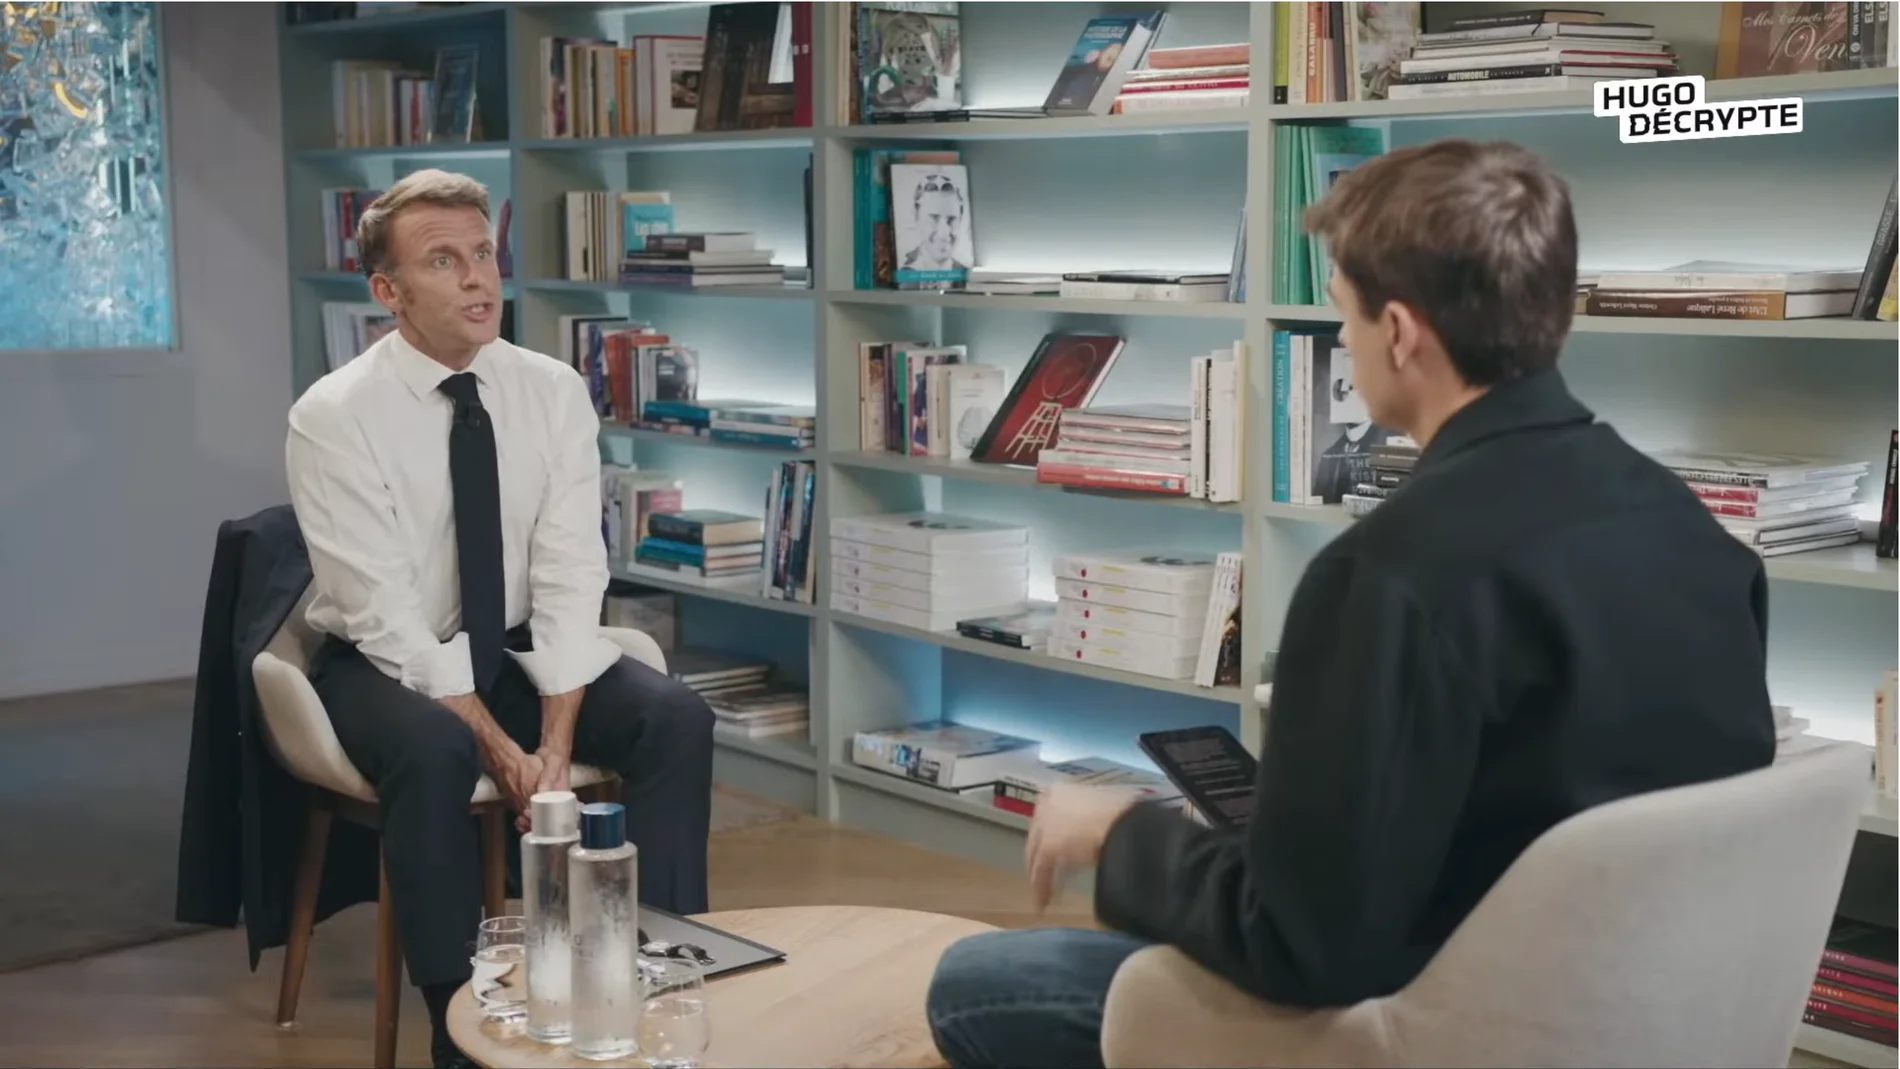 Macron, entrevistado en el canal de YouTube de Hugo Décrypte